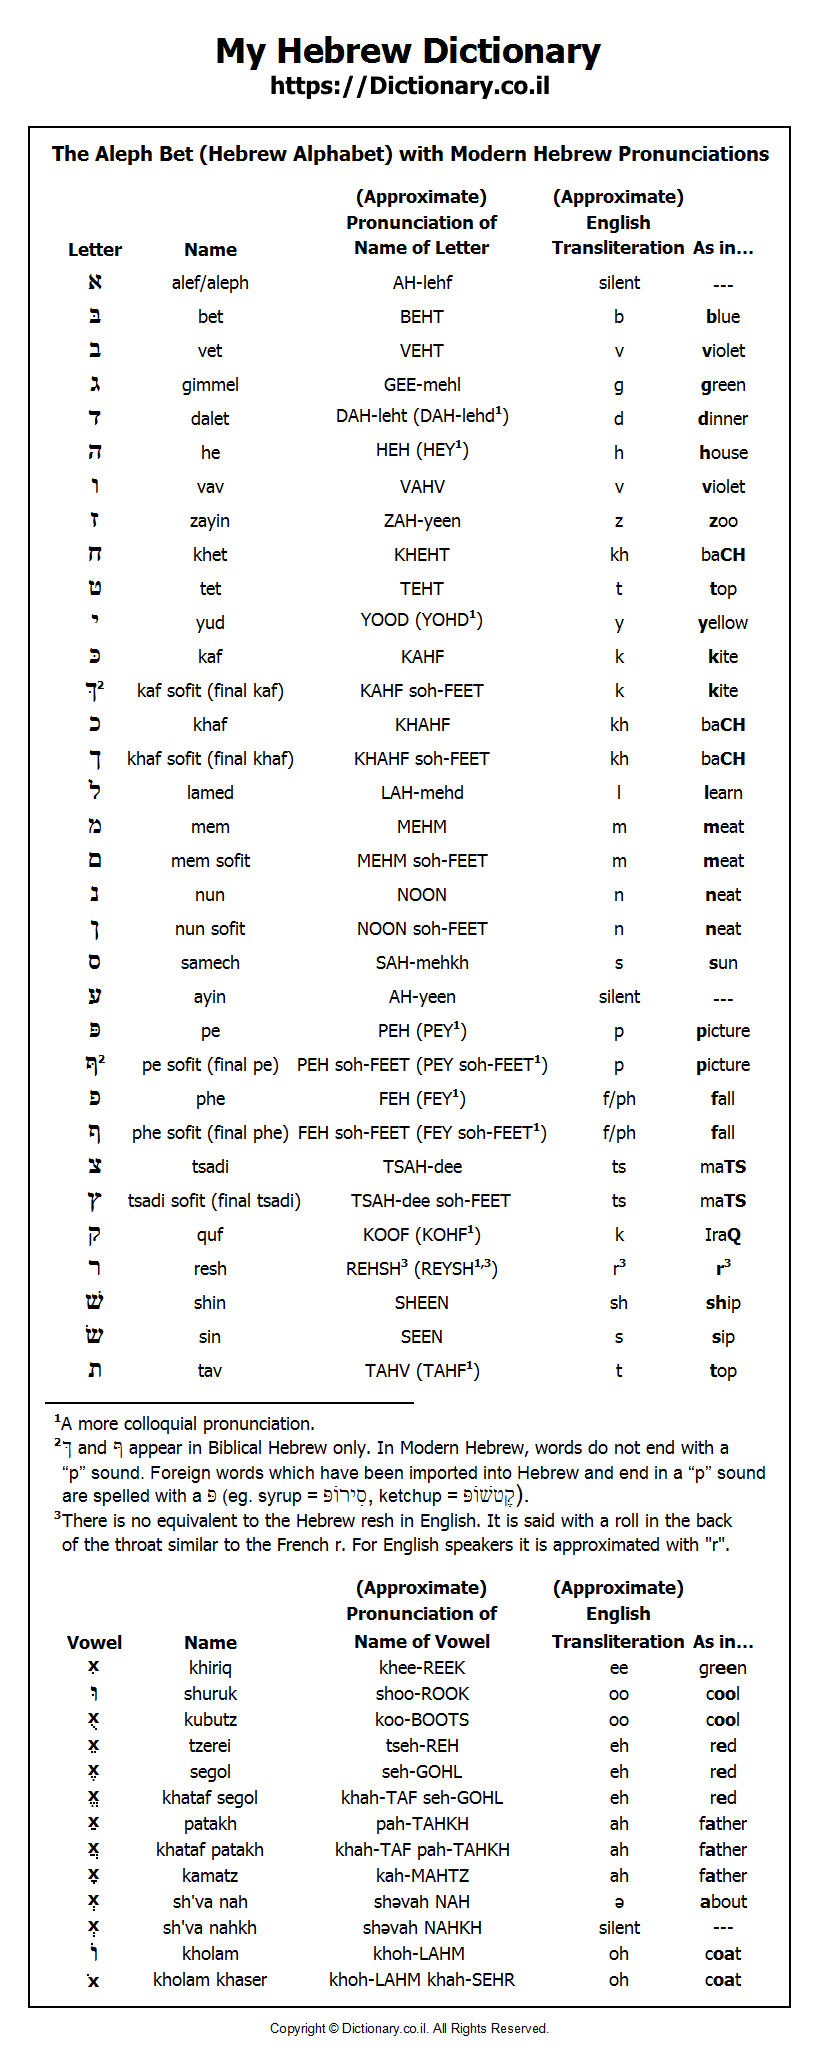 Hebrew alphabet and guide to modern Hebrew pronunciation